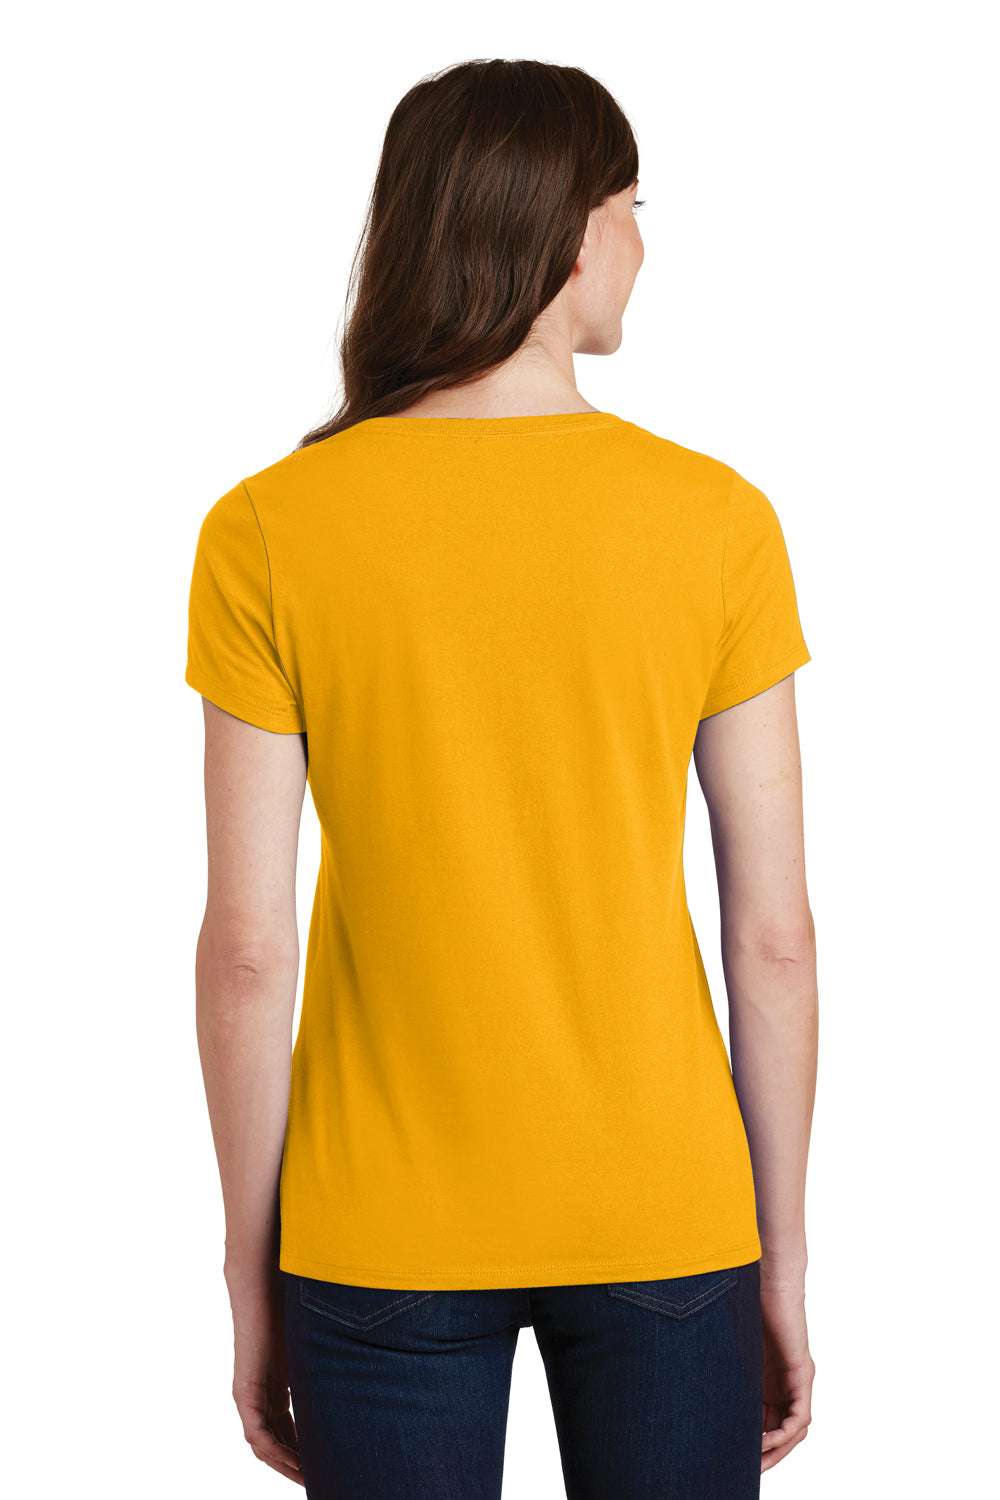 Port & Company LPC450V Womens Fan Favorite Short Sleeve V-Neck T-Shirt Gold Back